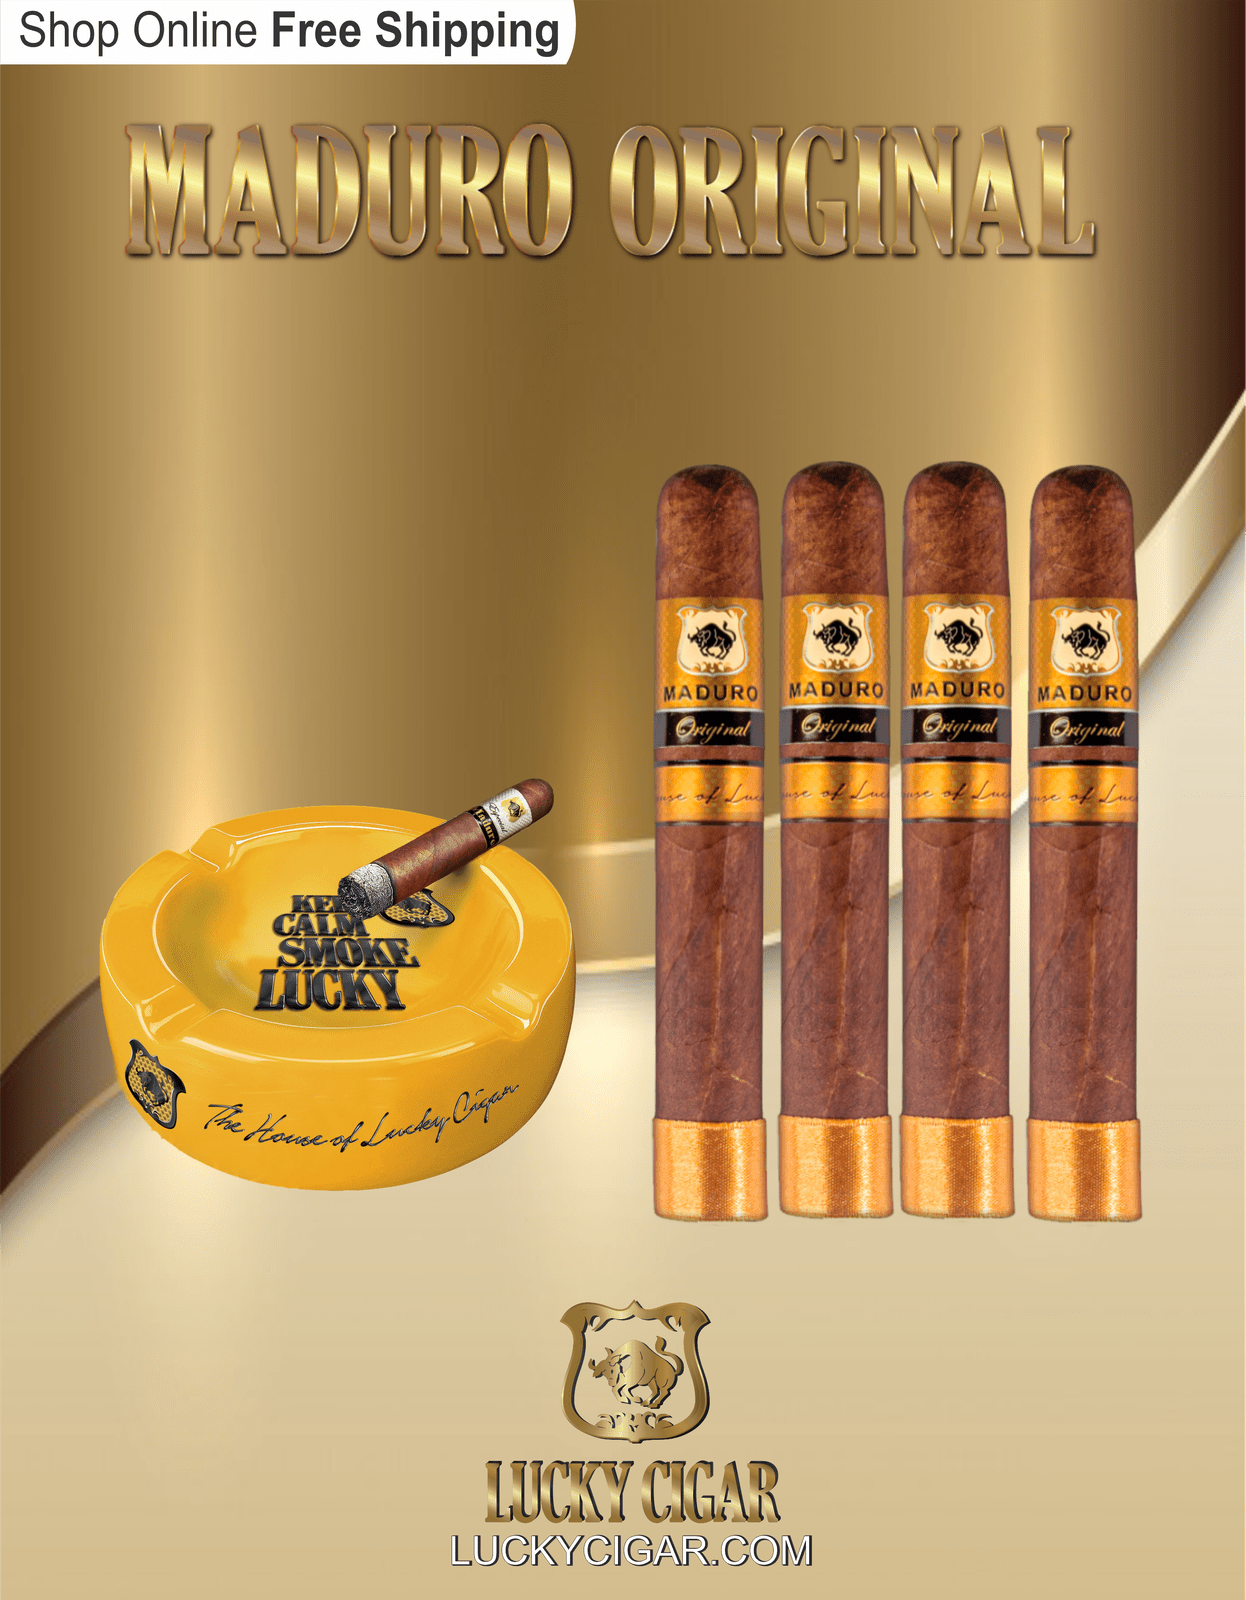 Lucky Cigar Sampler Sets: Set of 4 Maduro Original Toro 6x50 Cigars with Ashtray